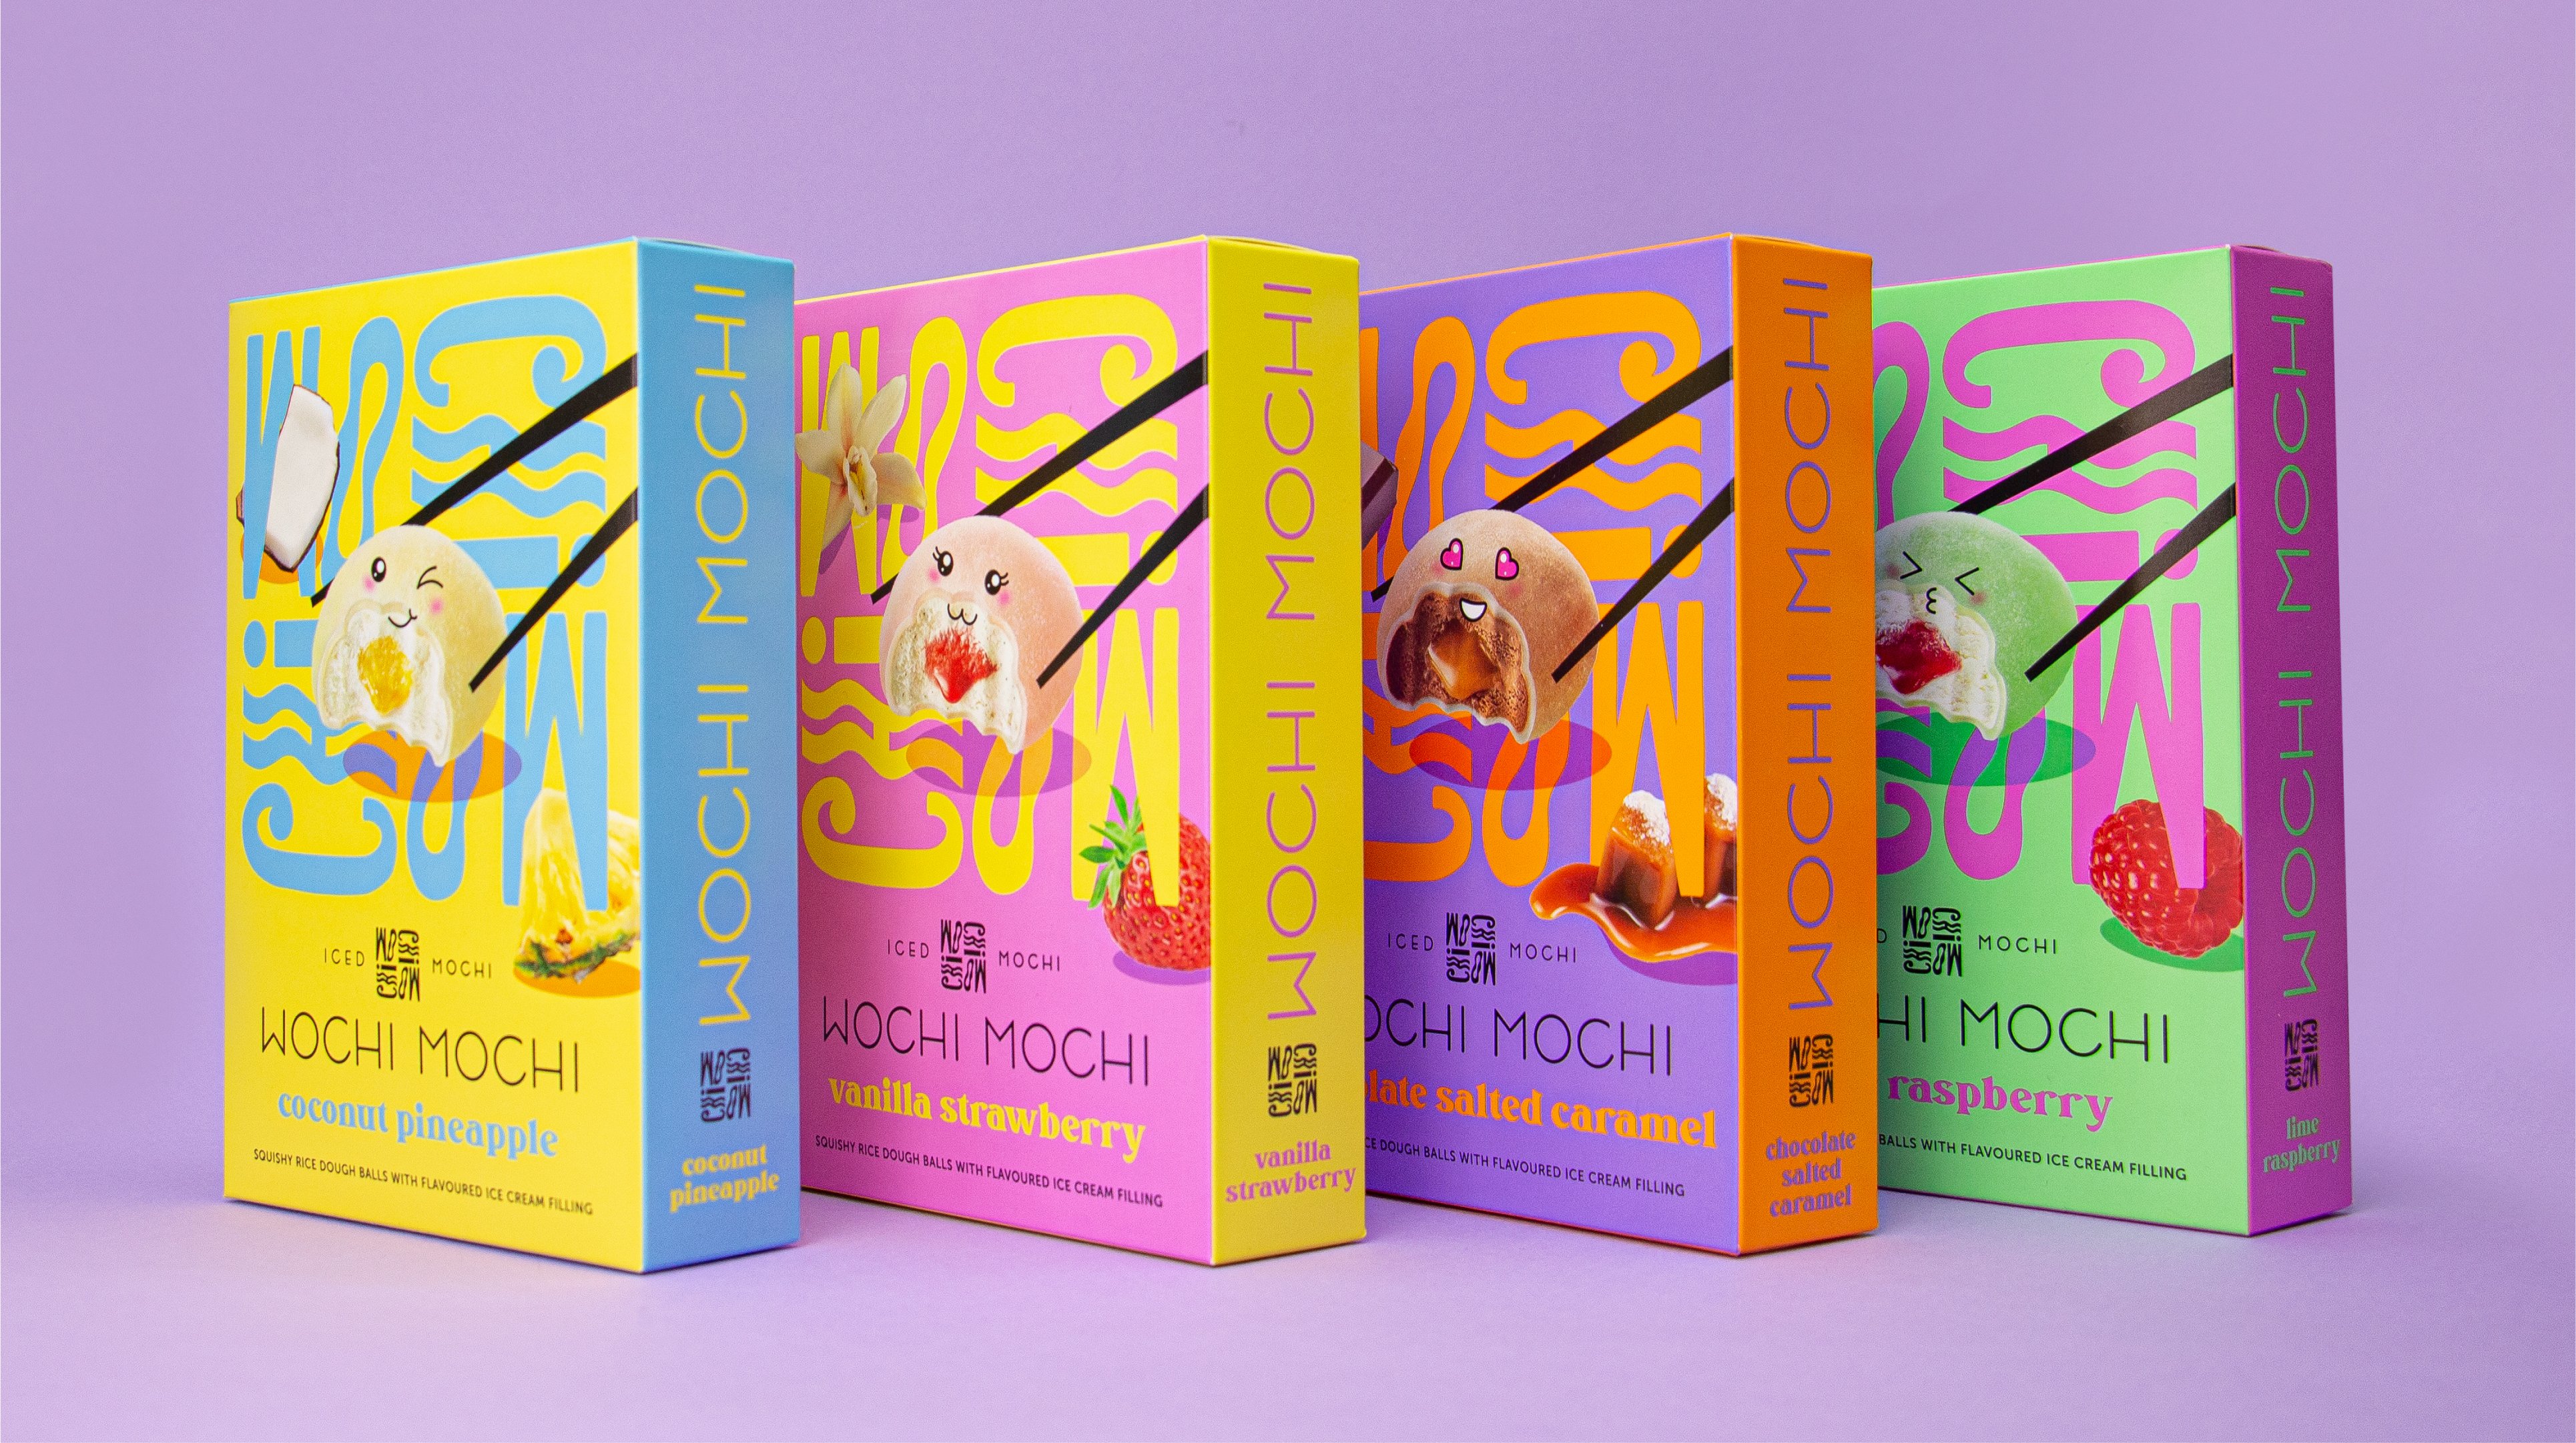 NL packaging awards template_wochi mochi-01